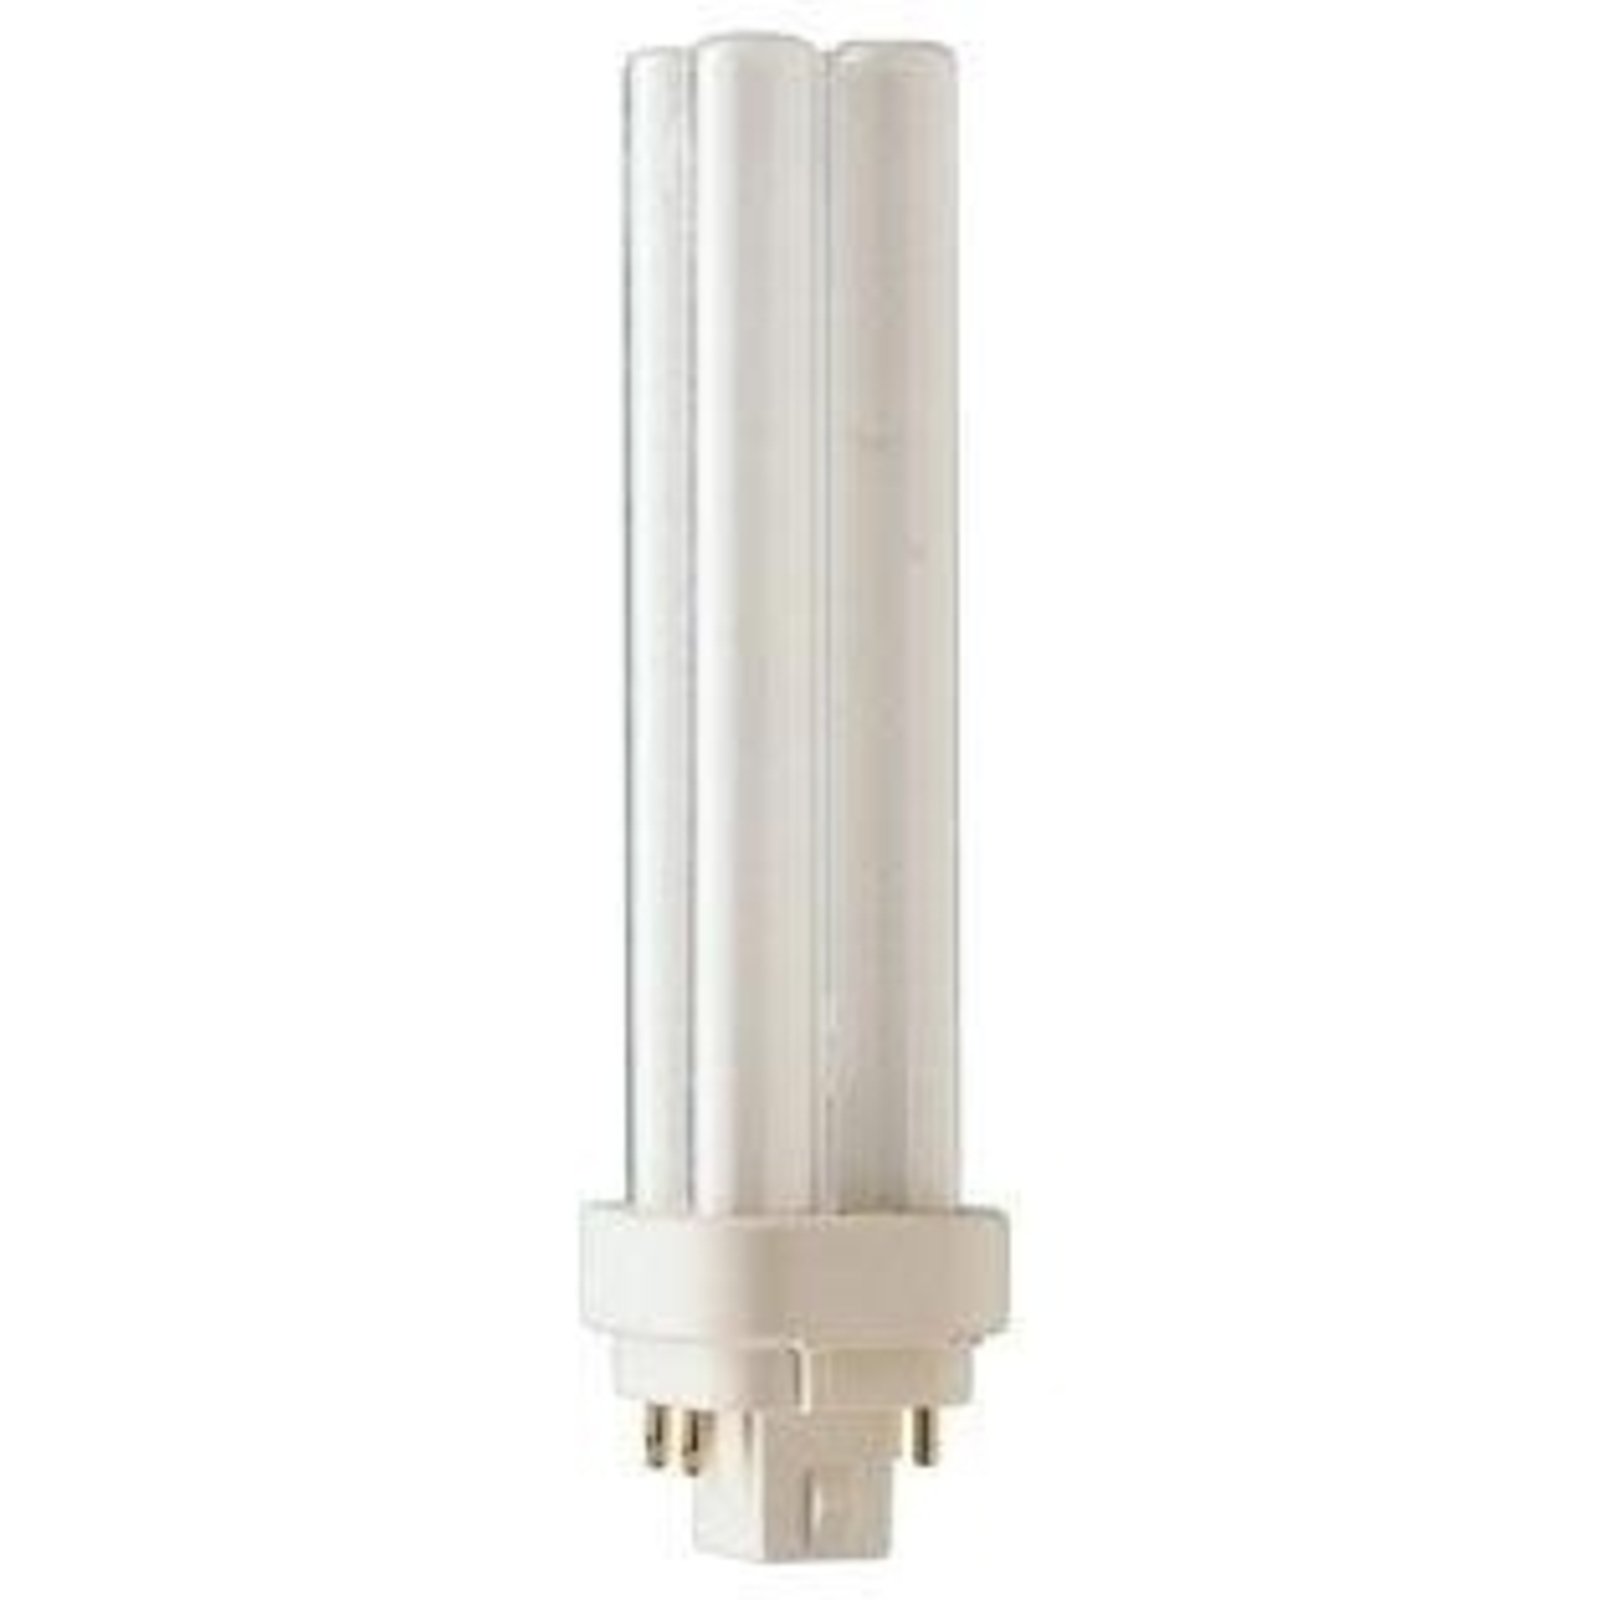 G24q compact fluorescent bulb Master 4pin 26 W 827